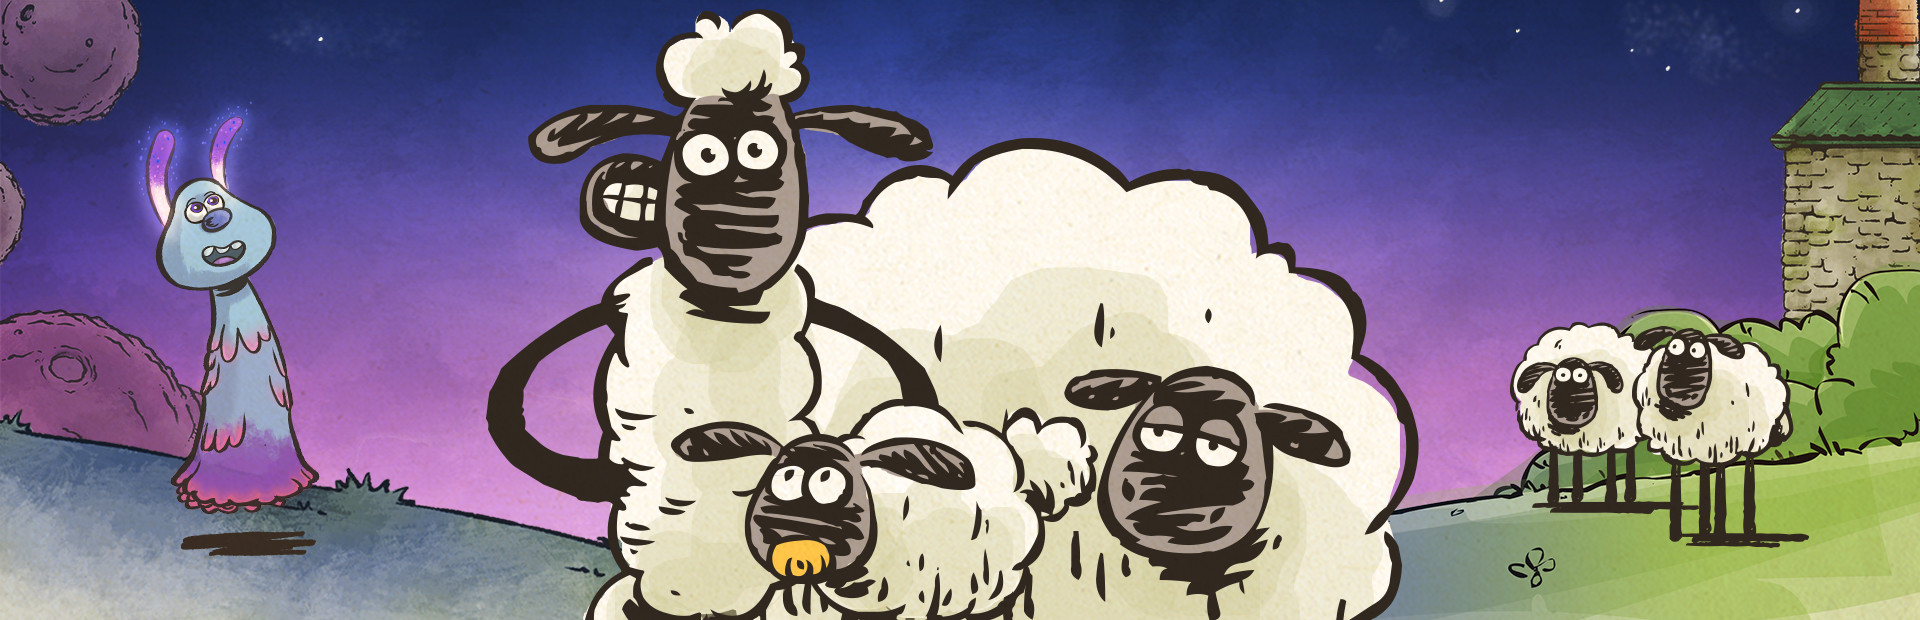 Home Sheep Home: Farmageddon Party Edition cover image